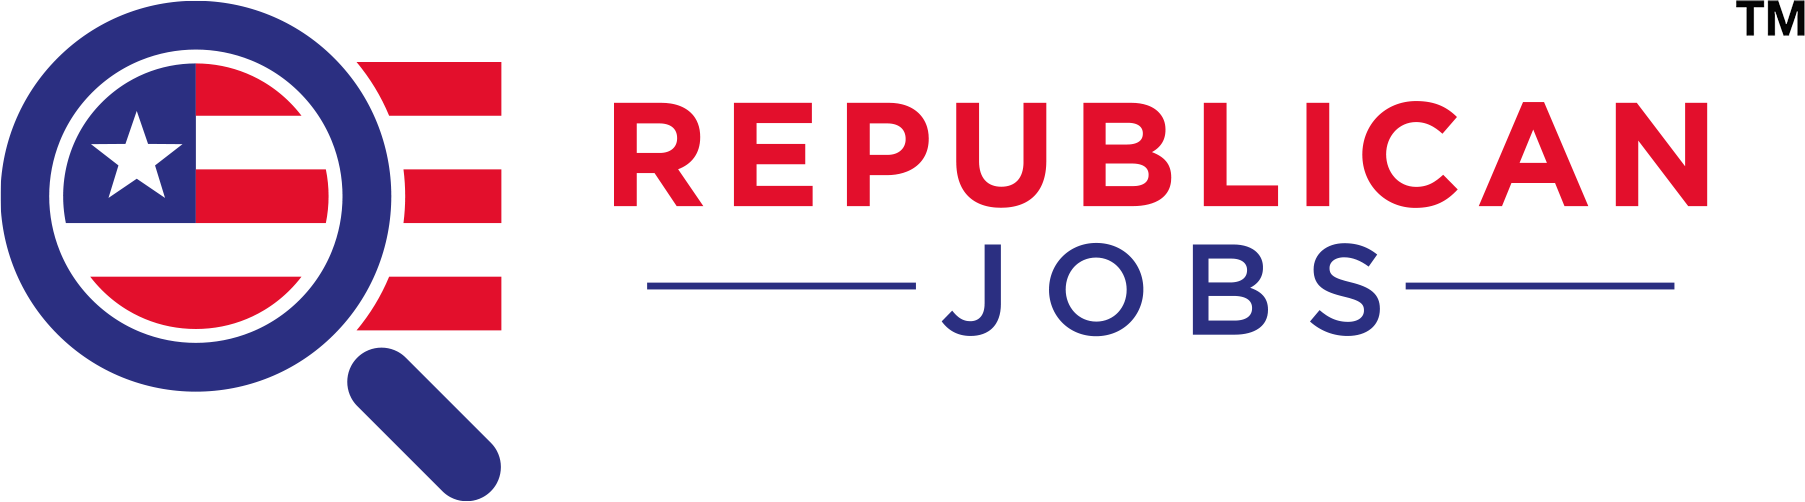 Republican jobs in Pomona California jobs